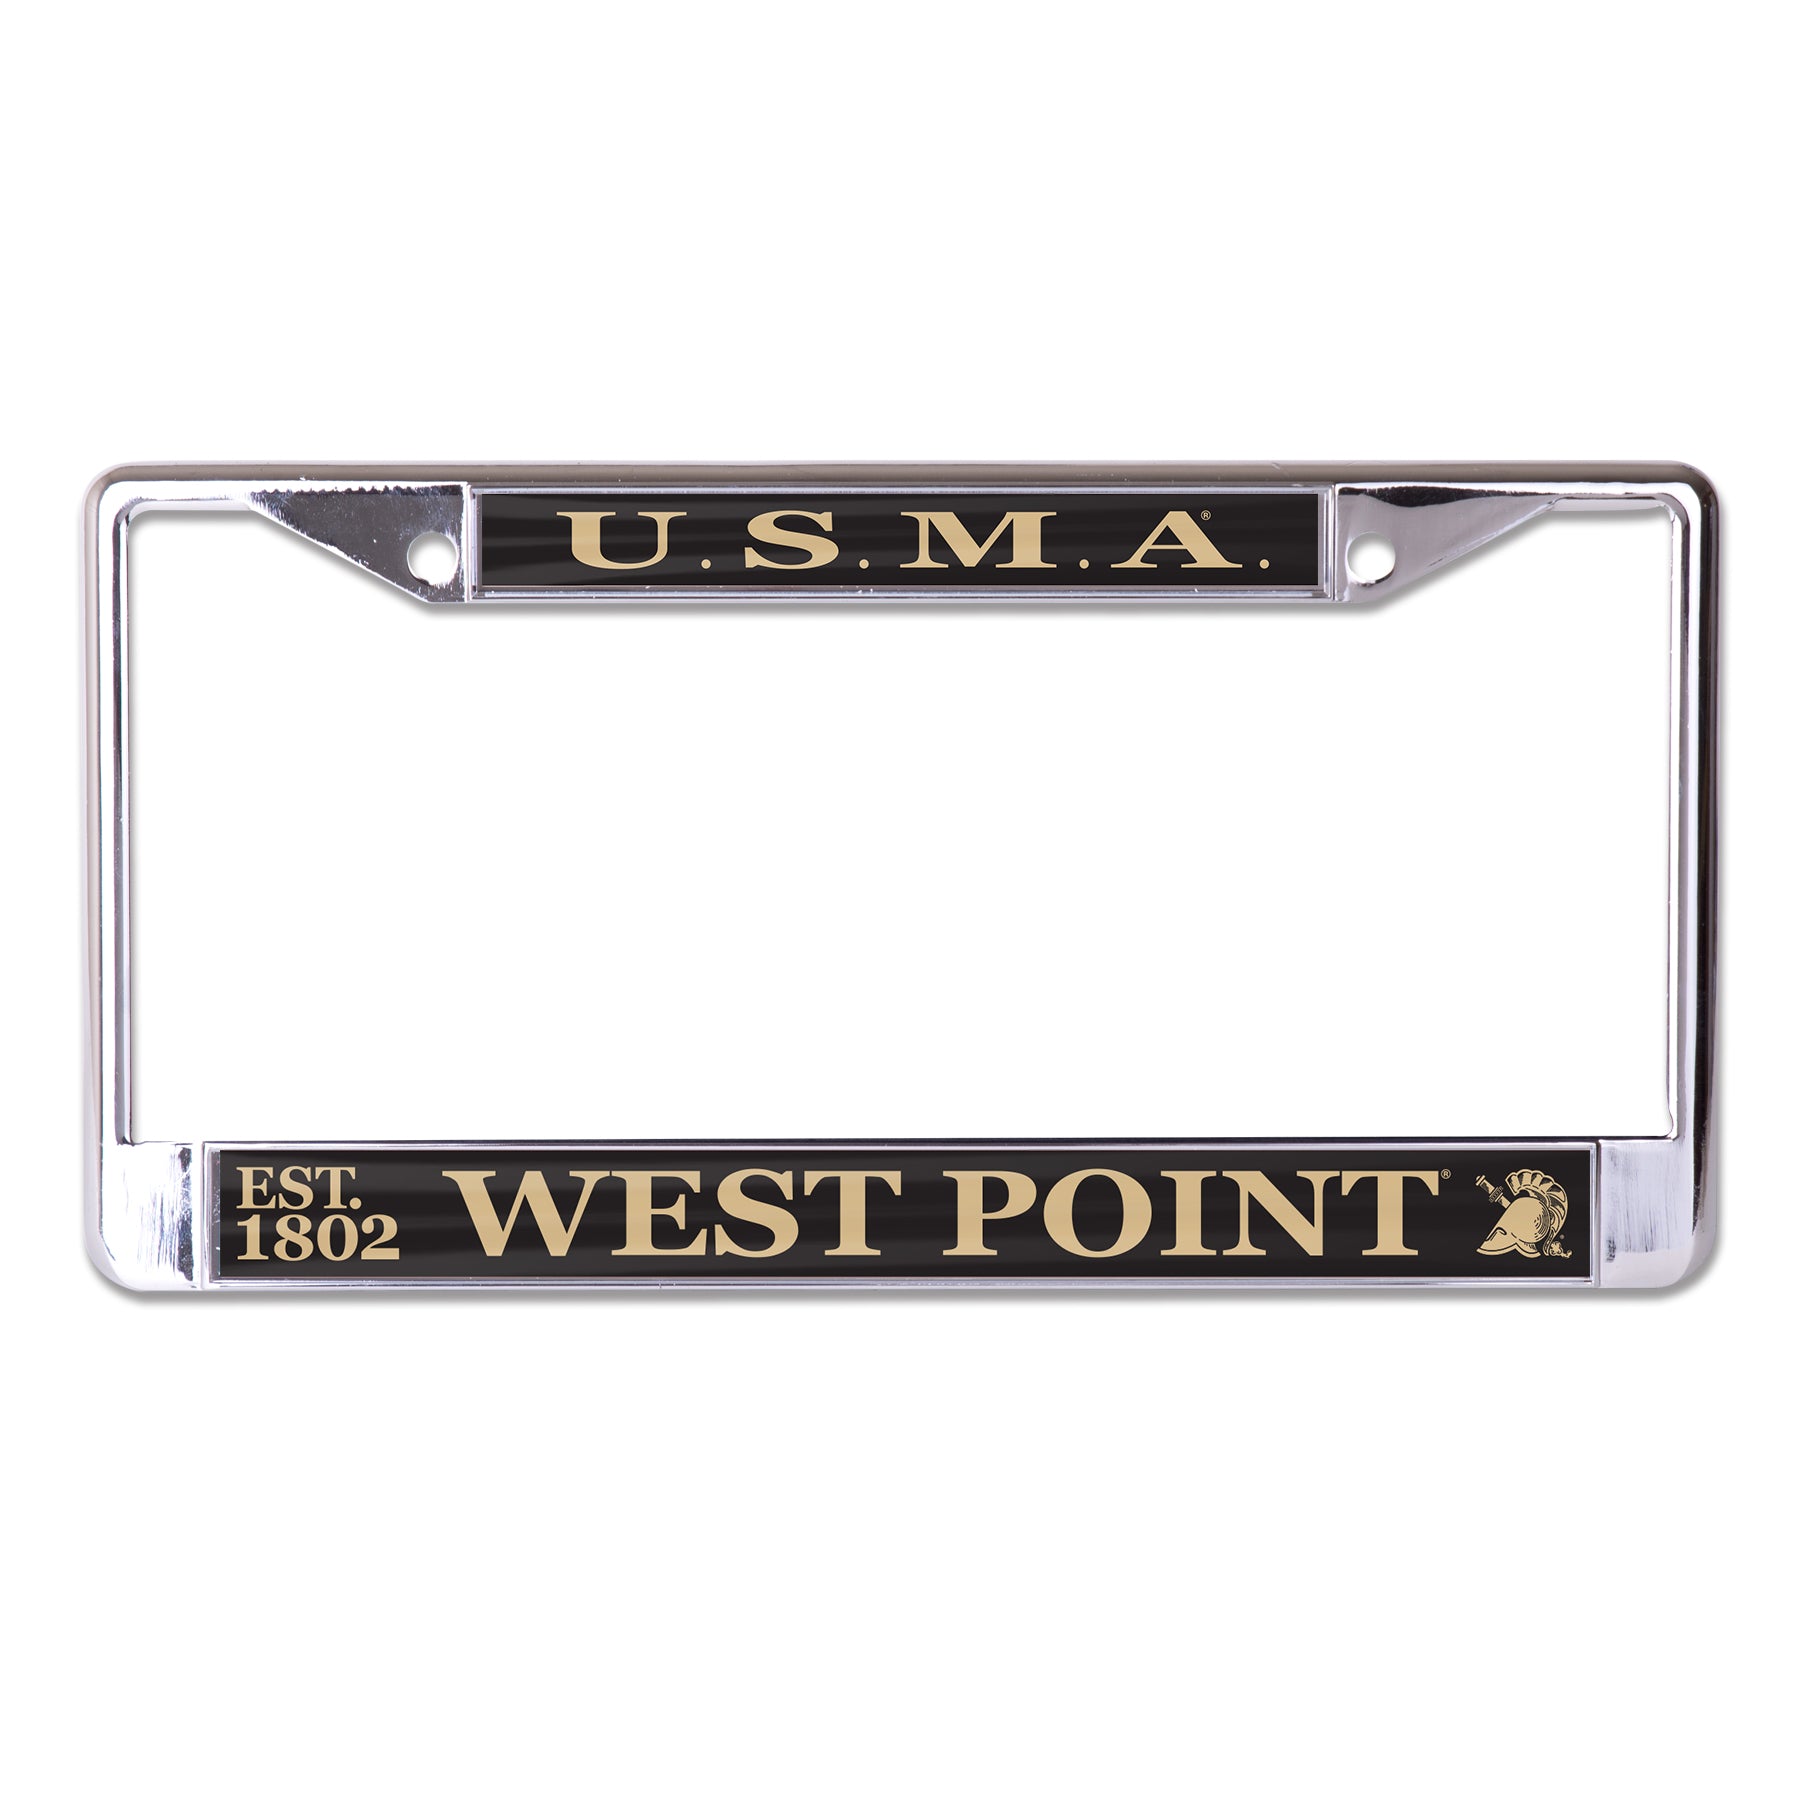 U.S.M.A West Point Chrome License Plate Frame